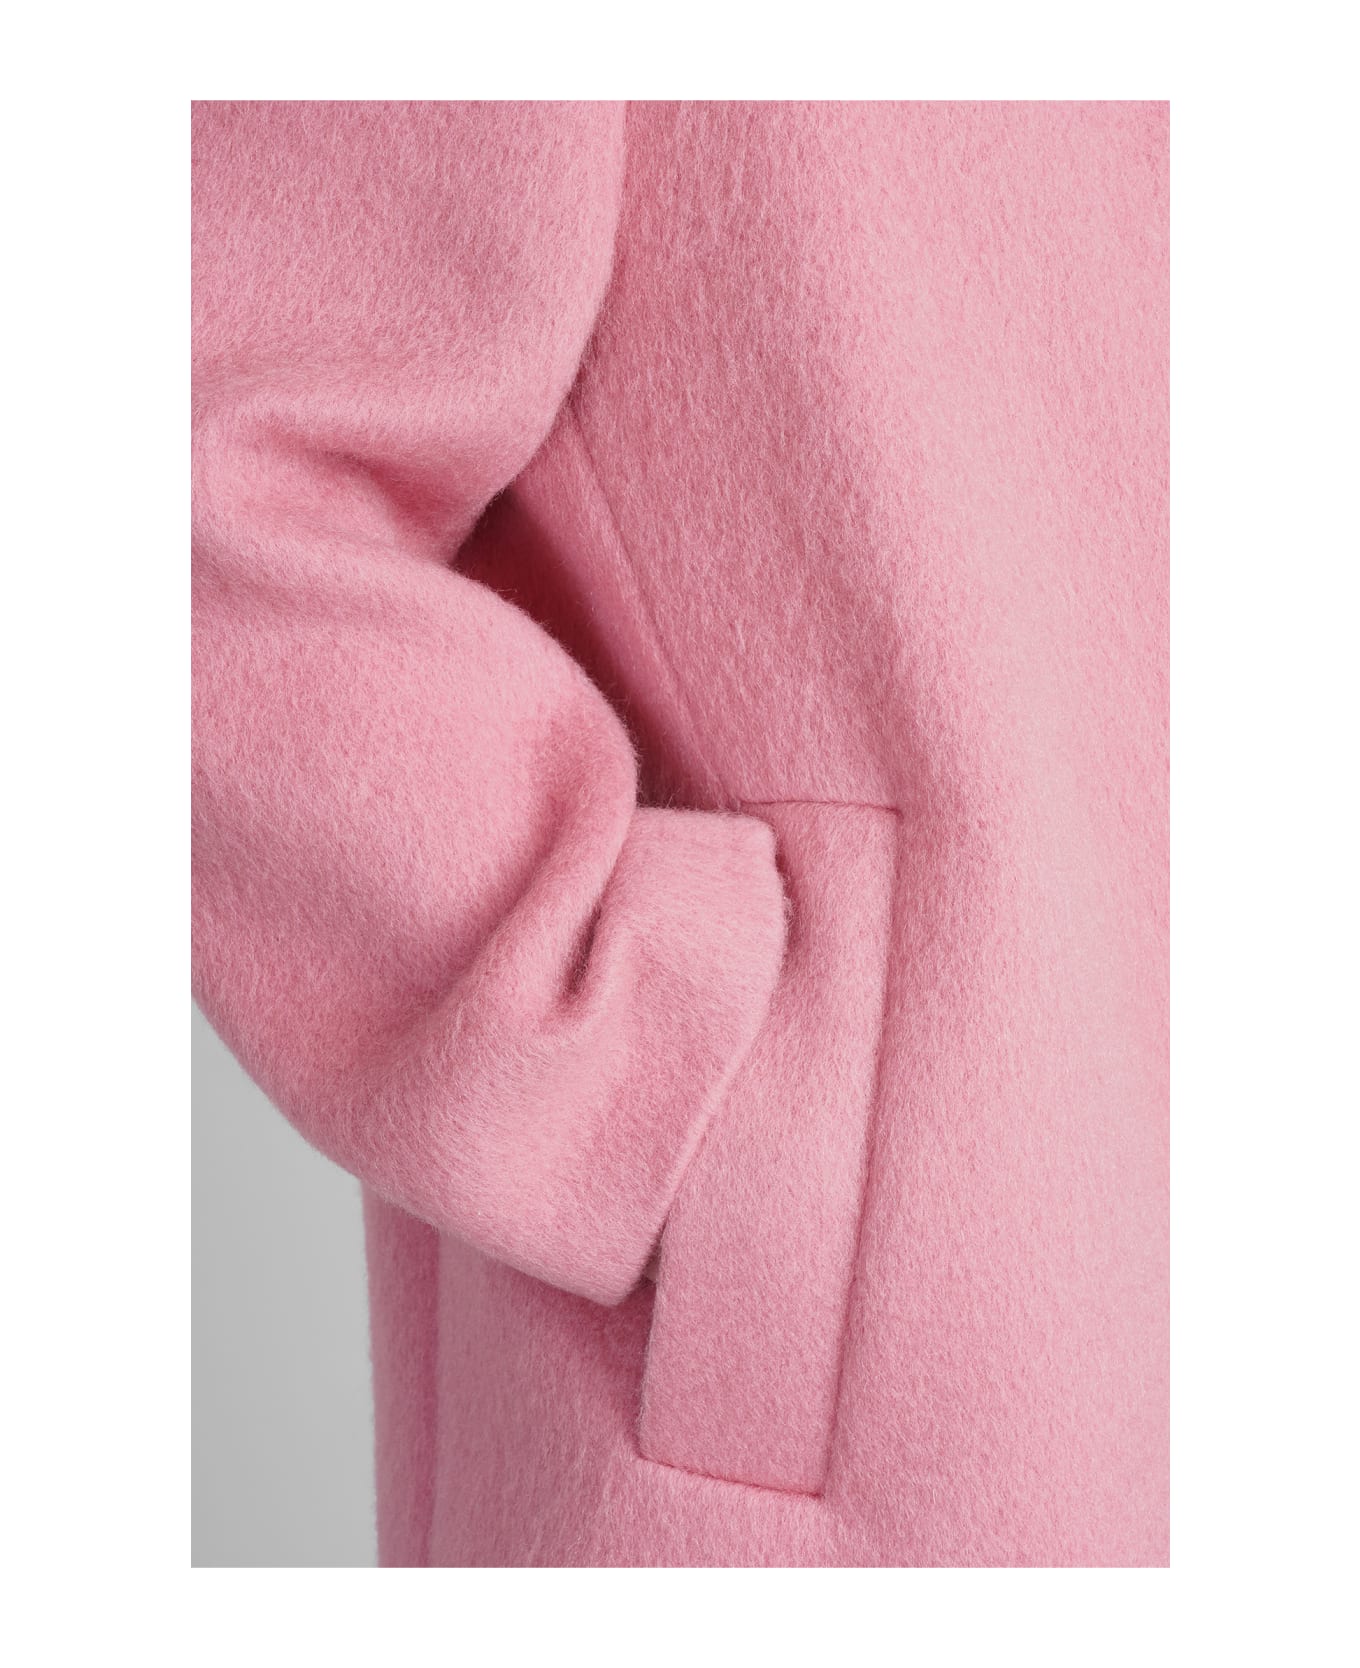 Jil Sander Coat In Rose-pink Wool - 655 コート